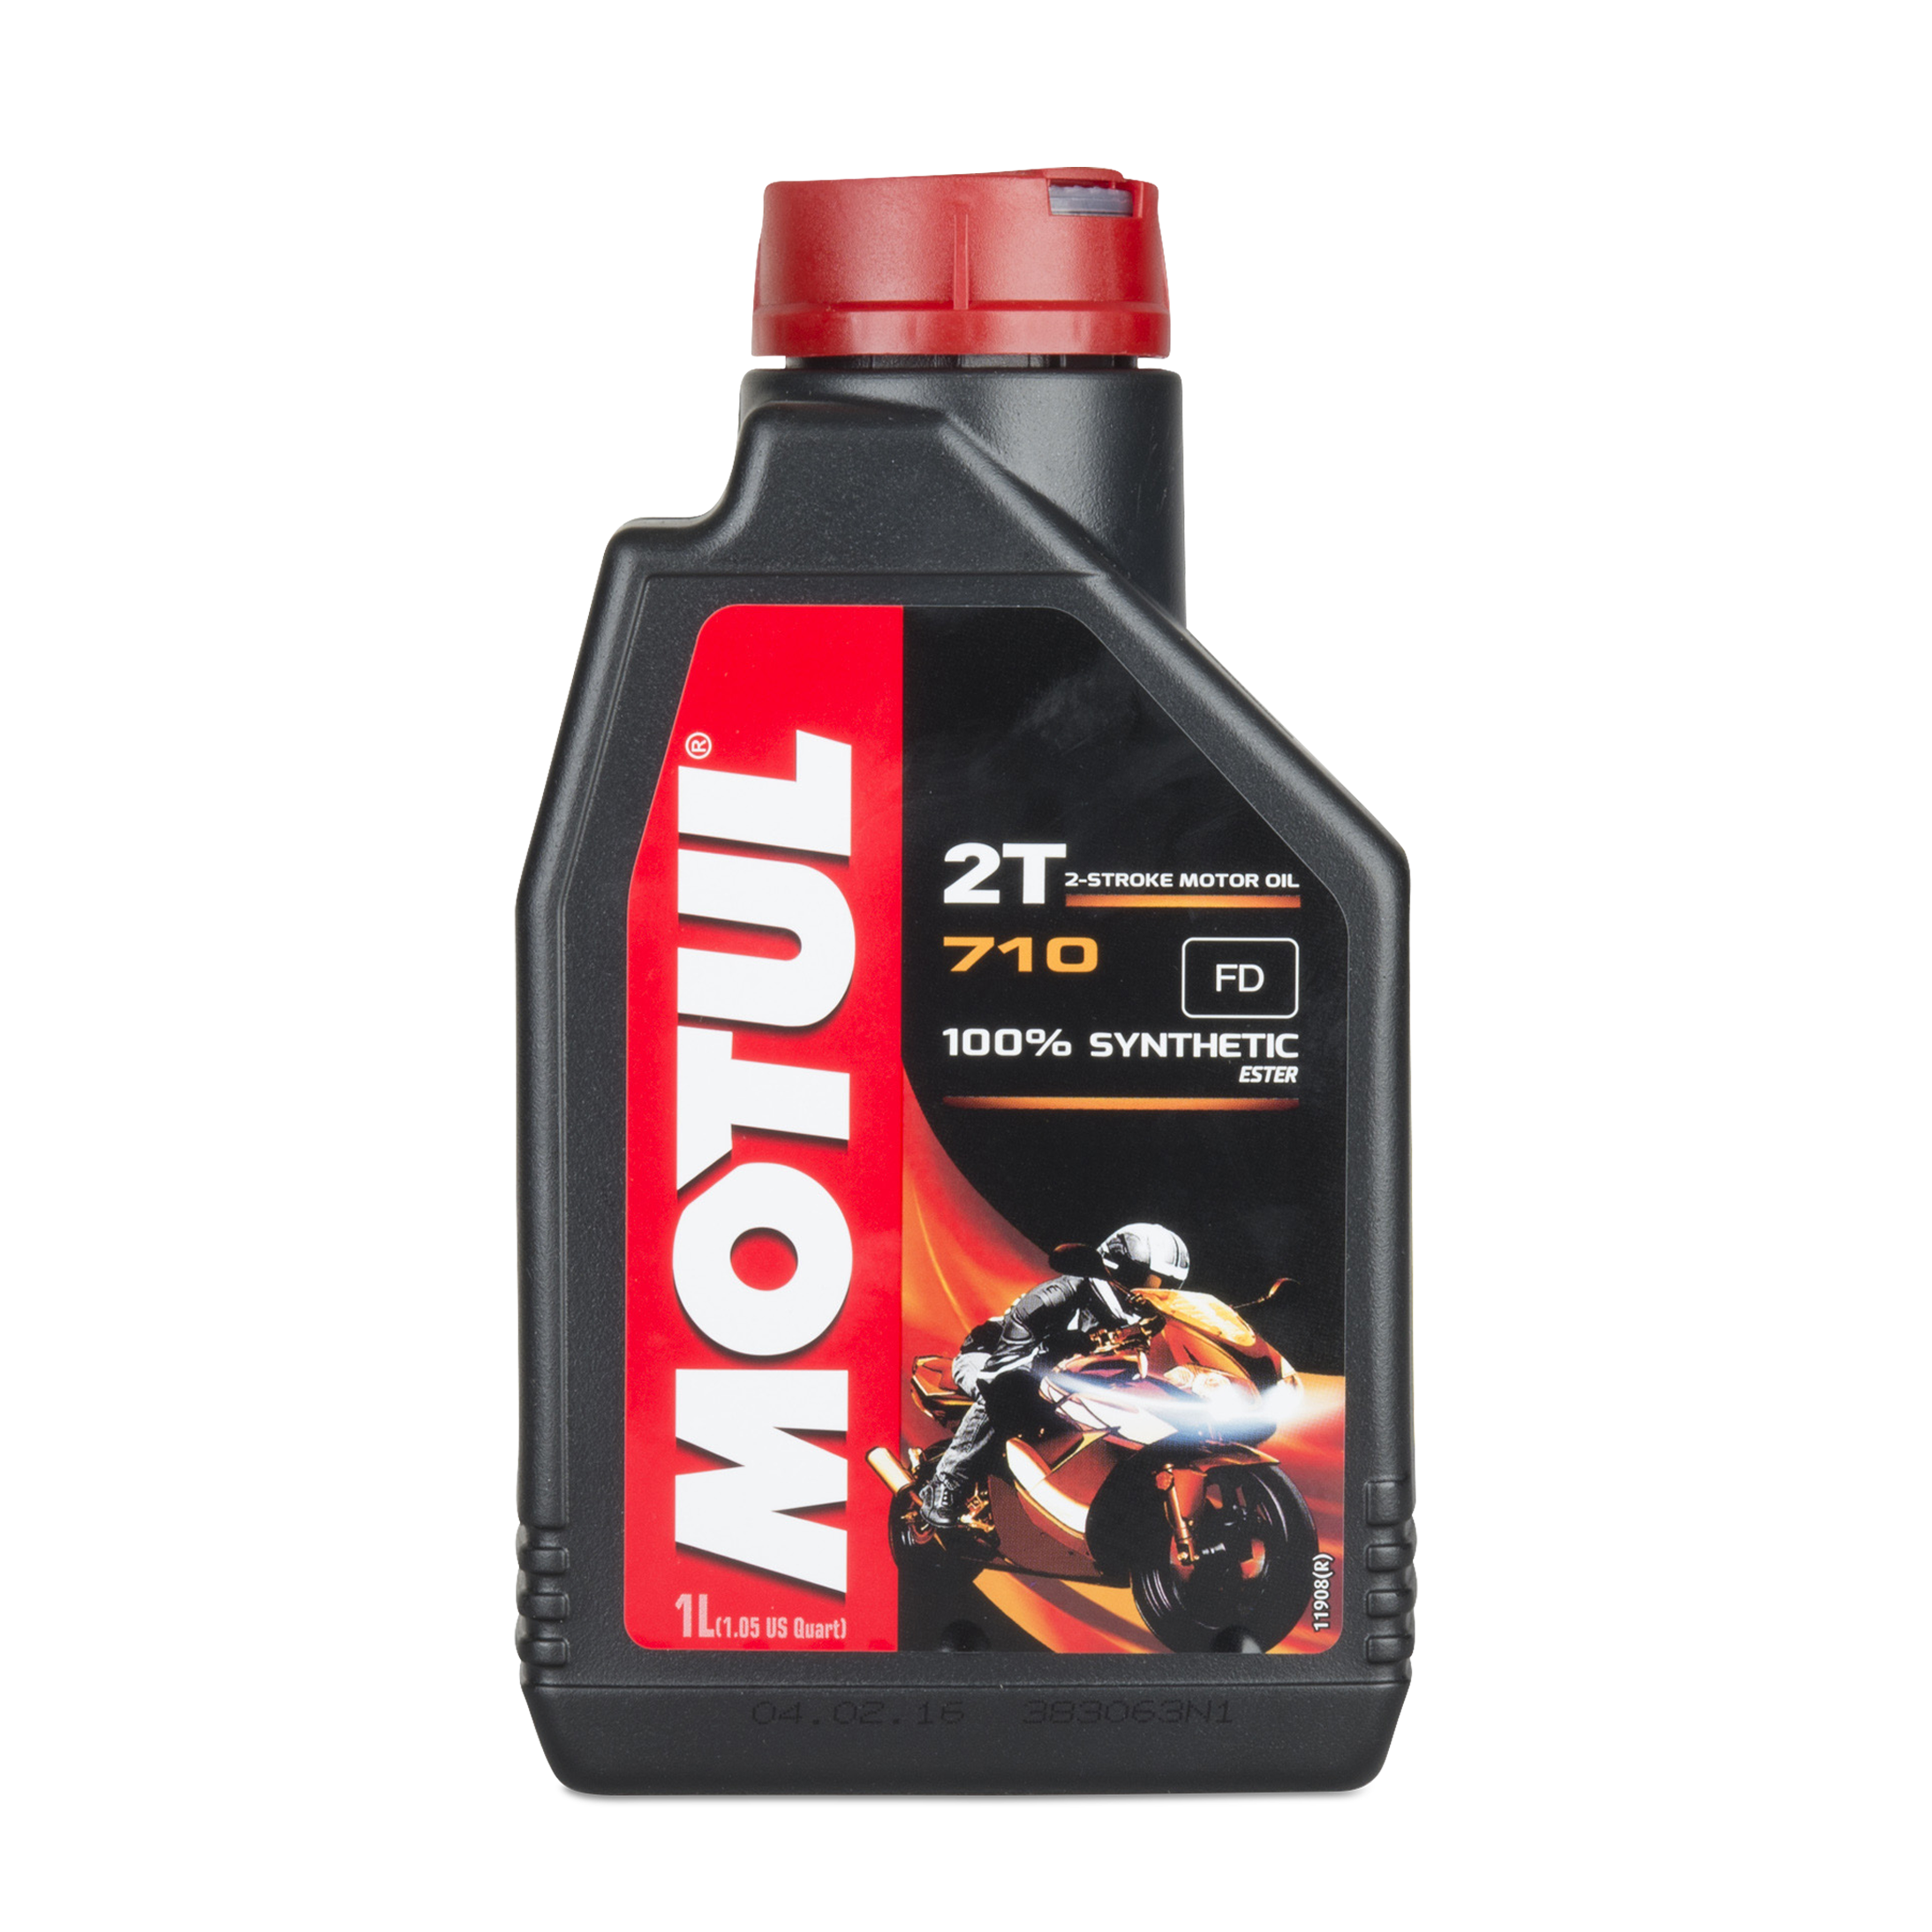 Motul 710 2T 1L Oil Fully synthetic - Now 20% Savings